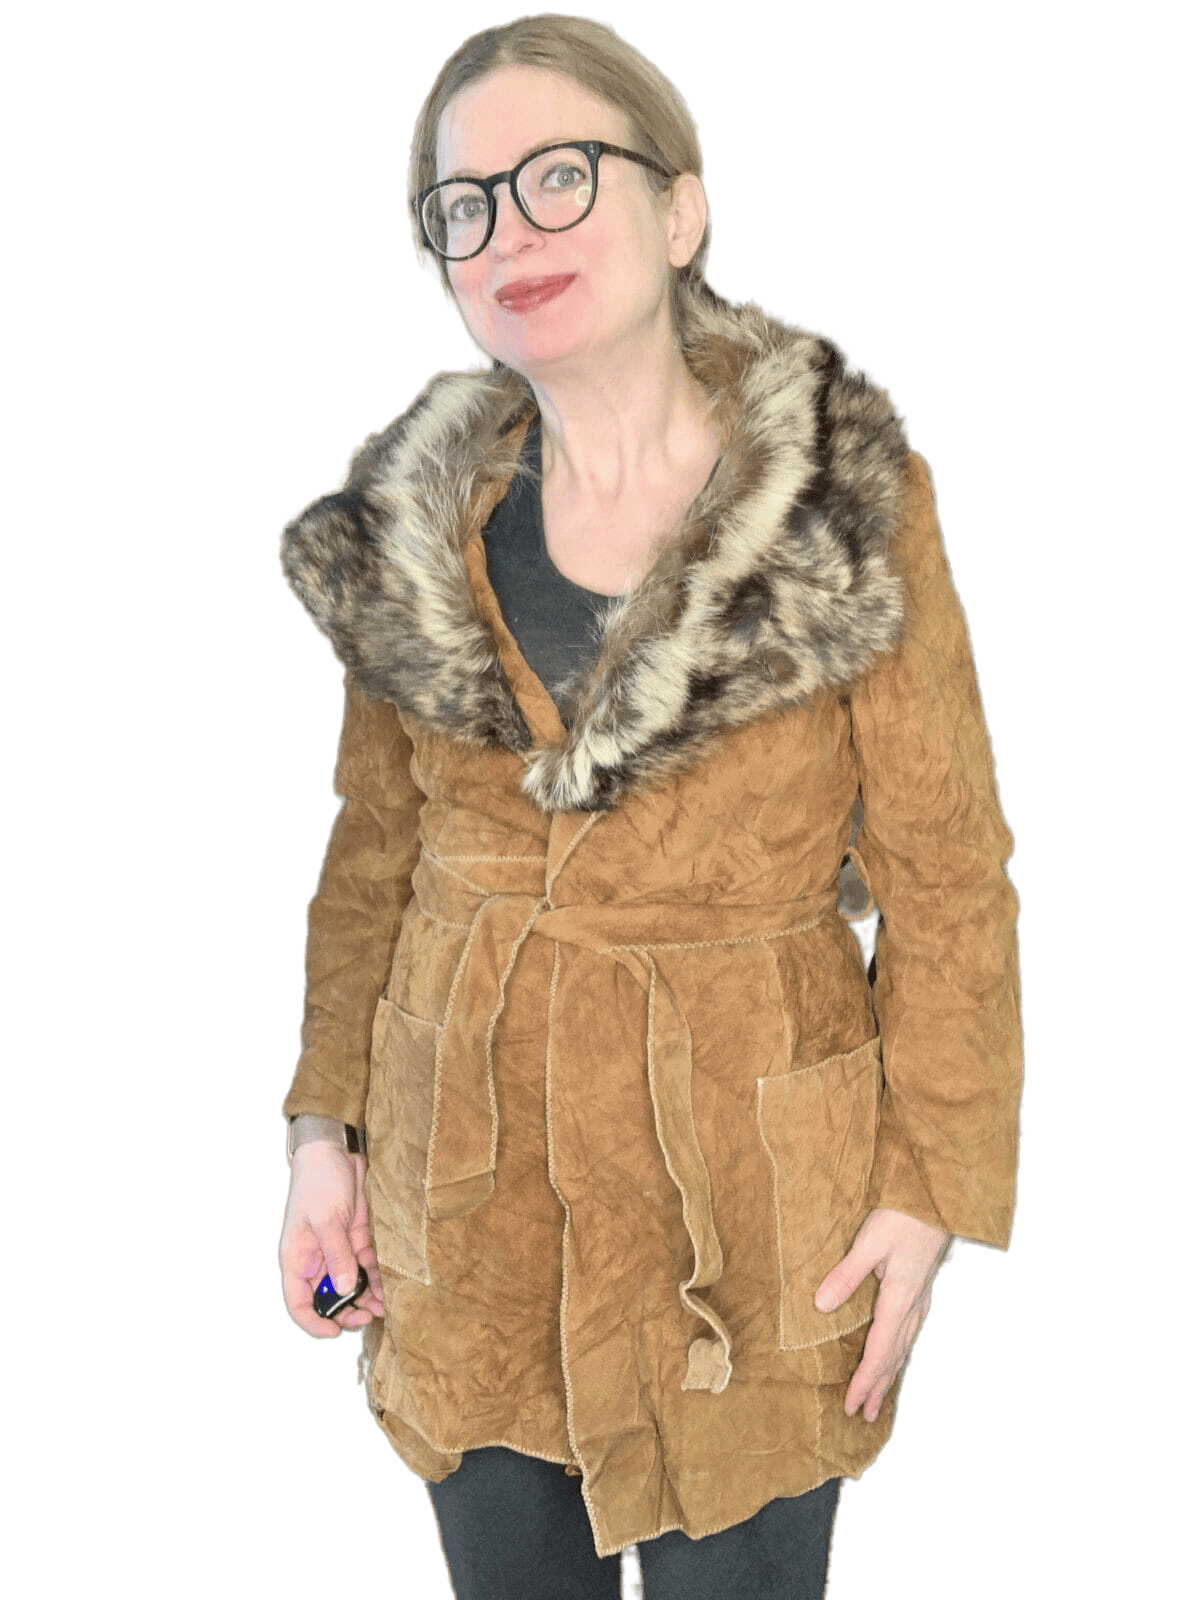 Vintage suede jacket with real raccoon fur collar